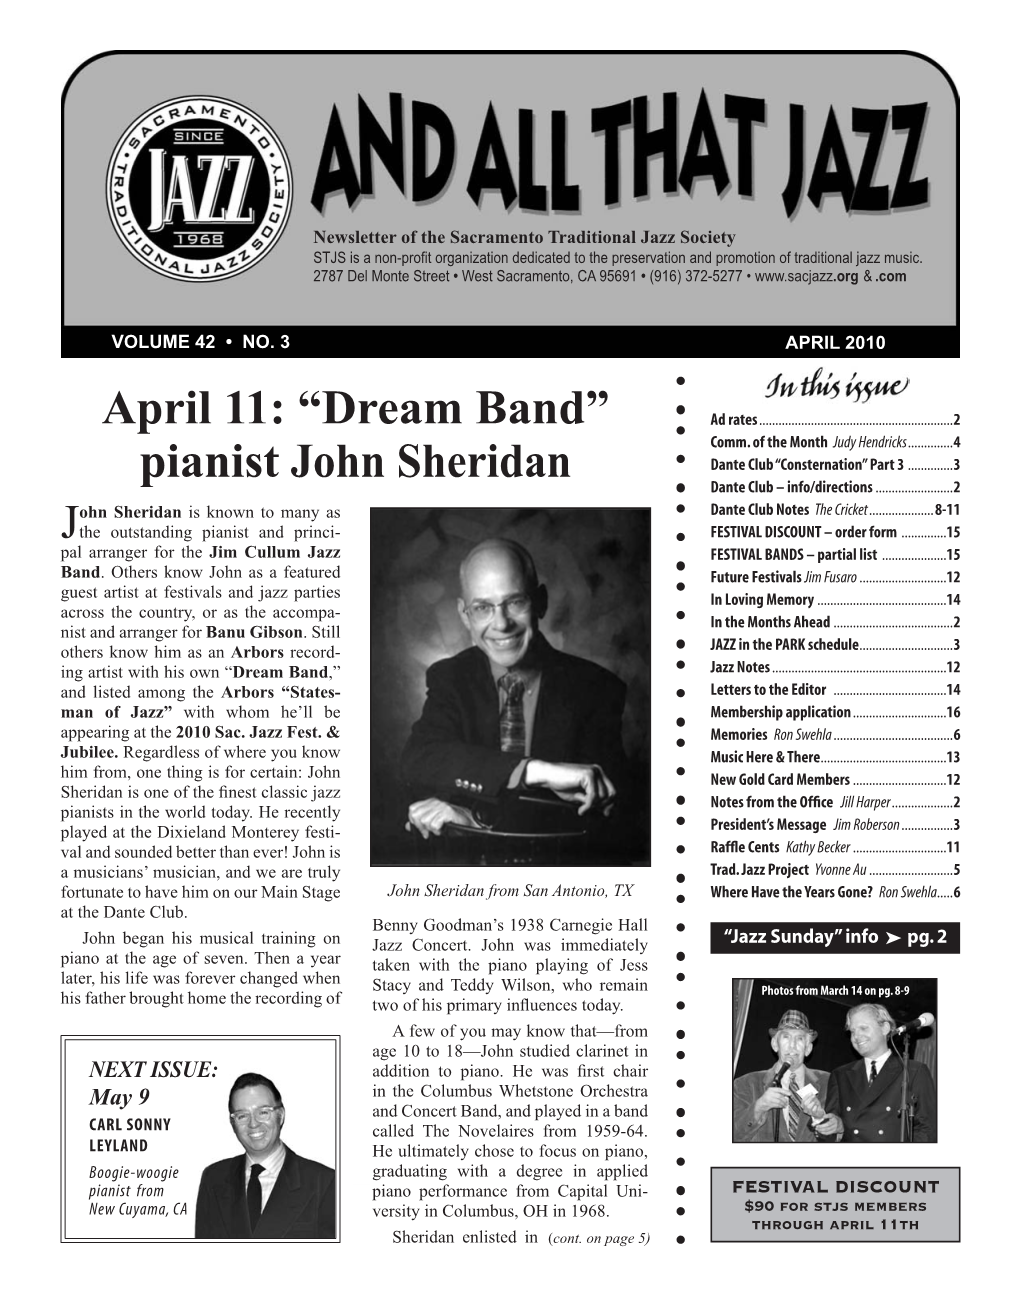 April 11: “Dream Band” Pianist John Sheridan